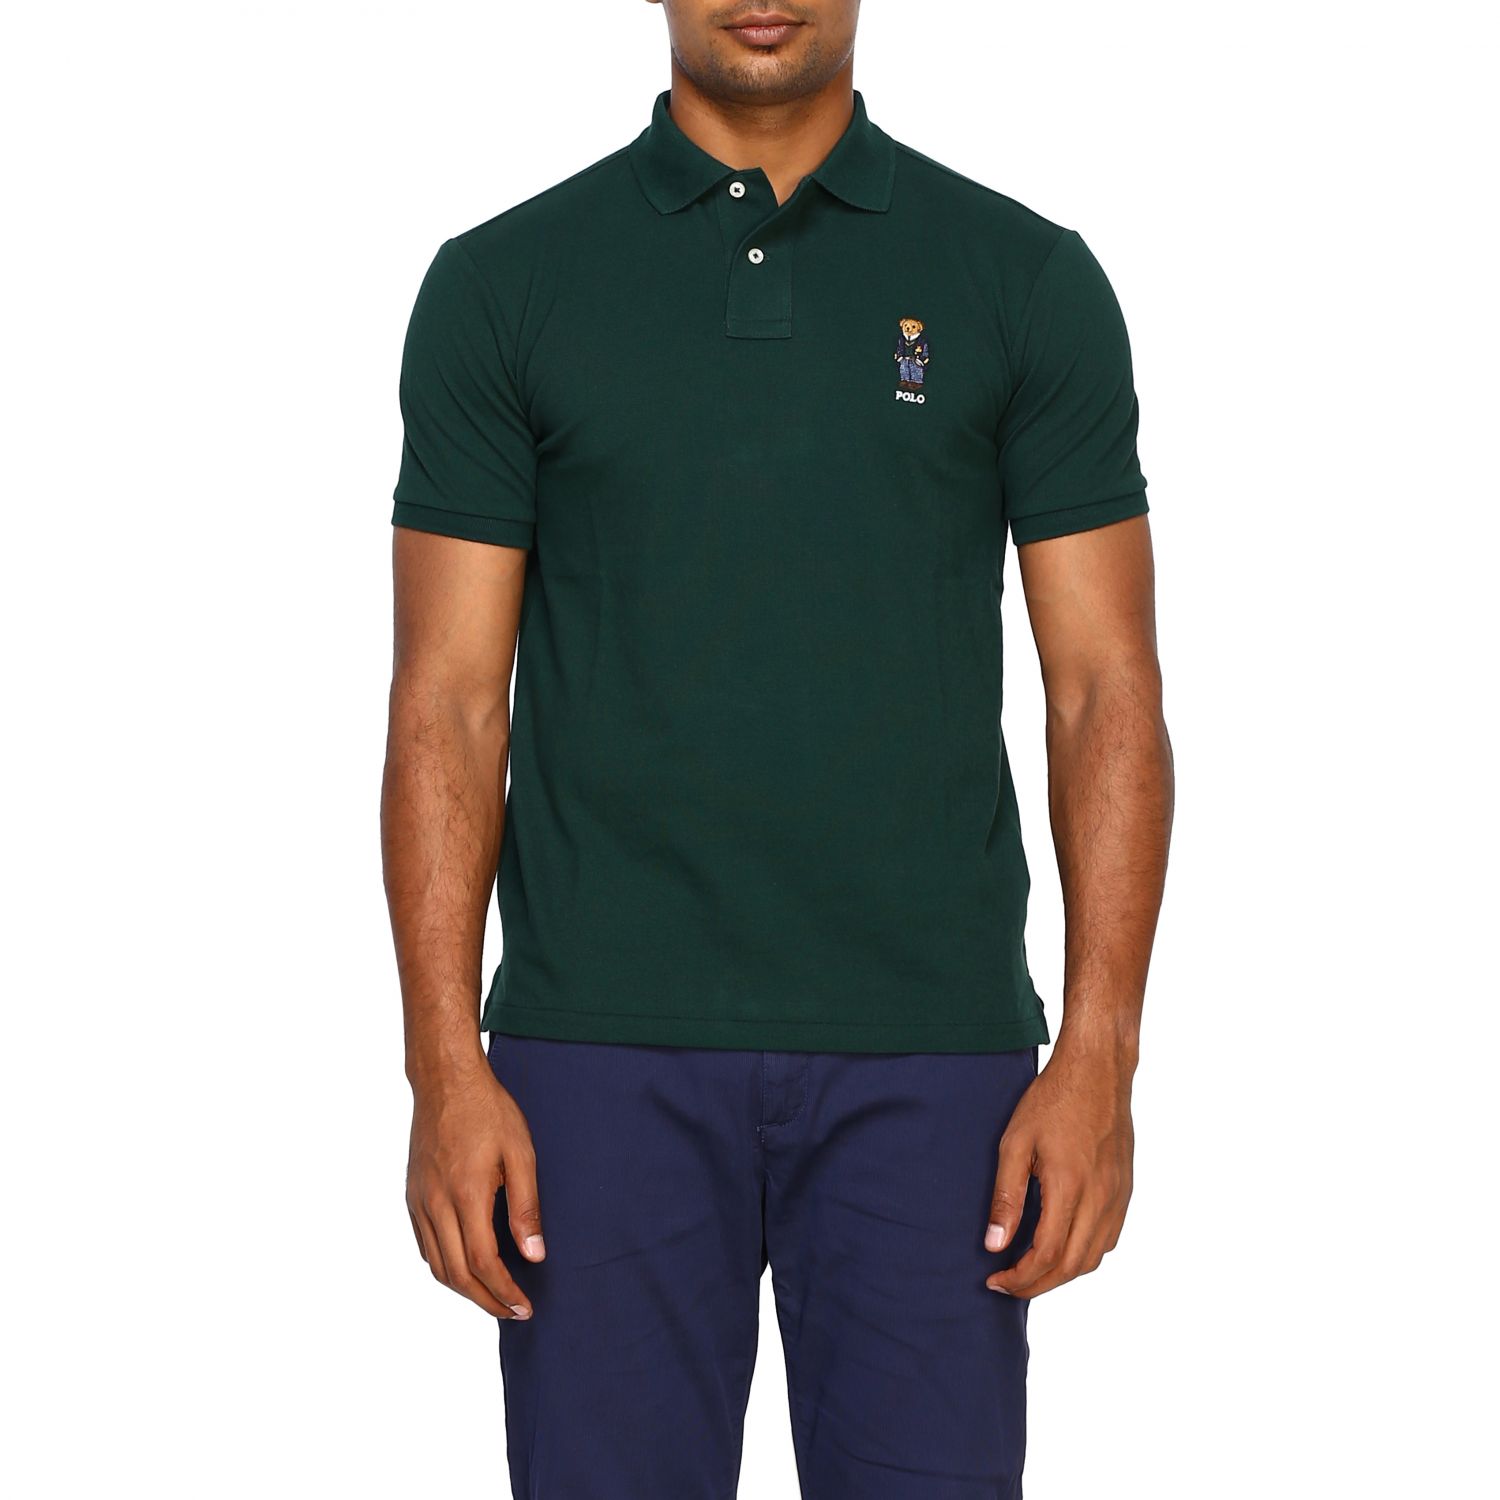 Polo Ralph Lauren Outlet: T-shirt men - Forest Green | Polo Shirt Polo ...